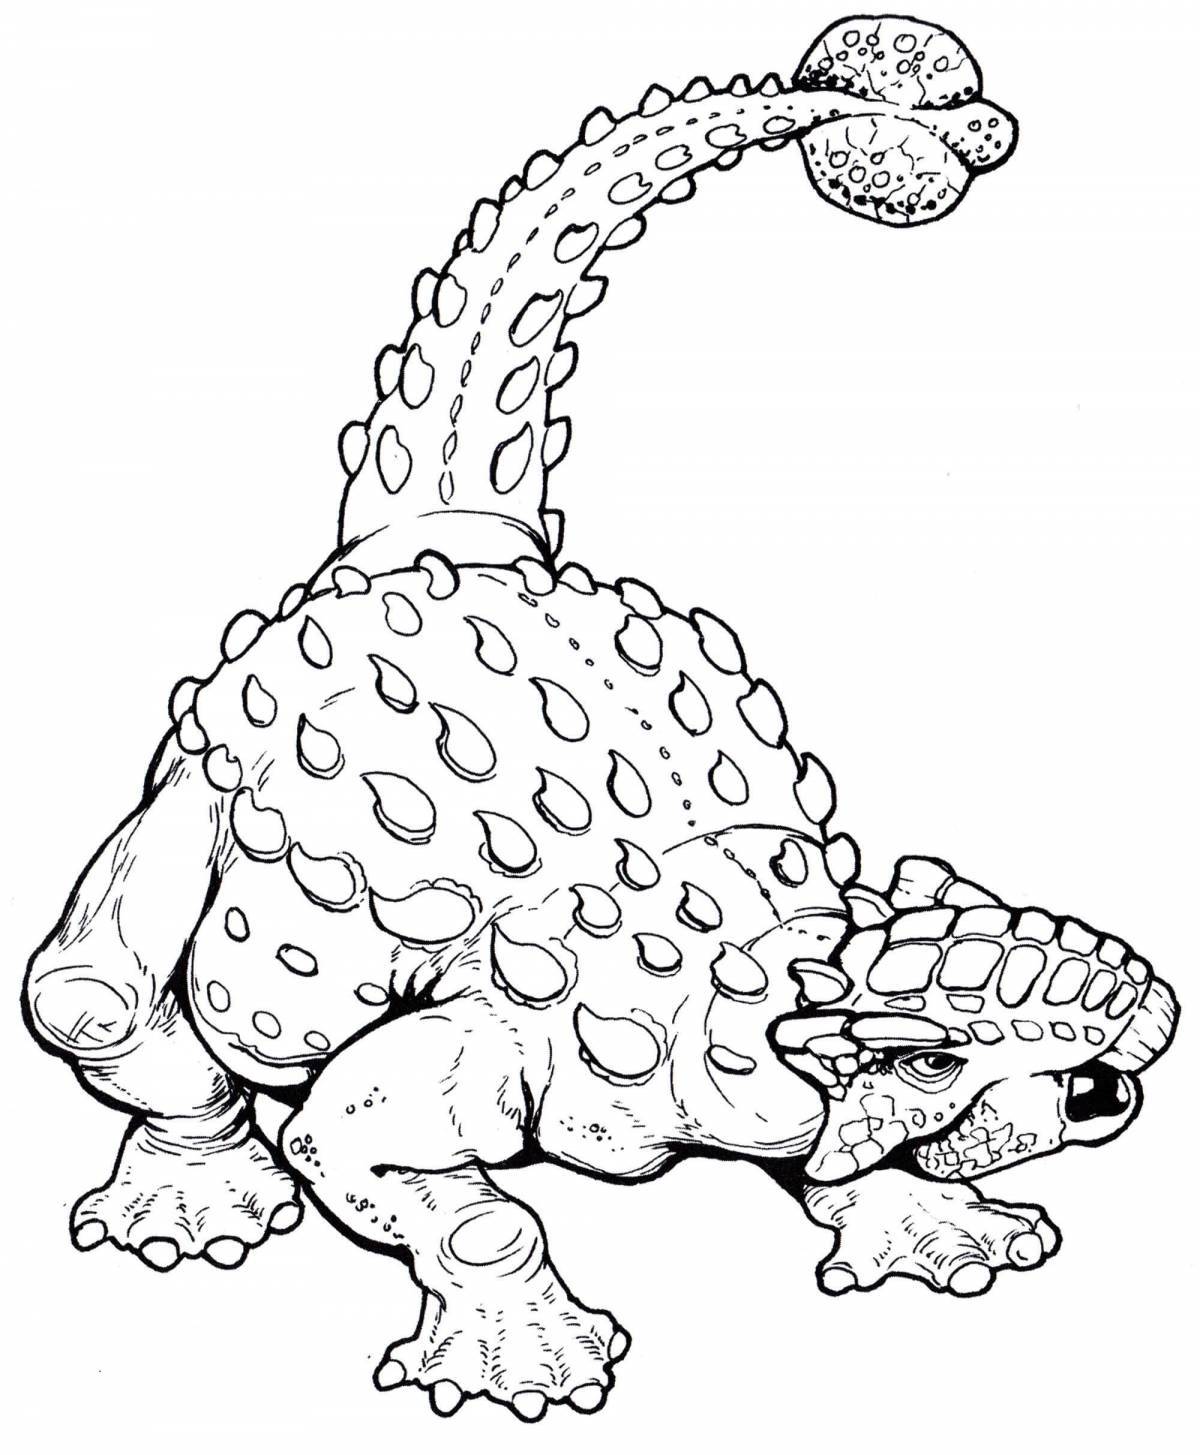 Dinosaur prehistoric coloring book